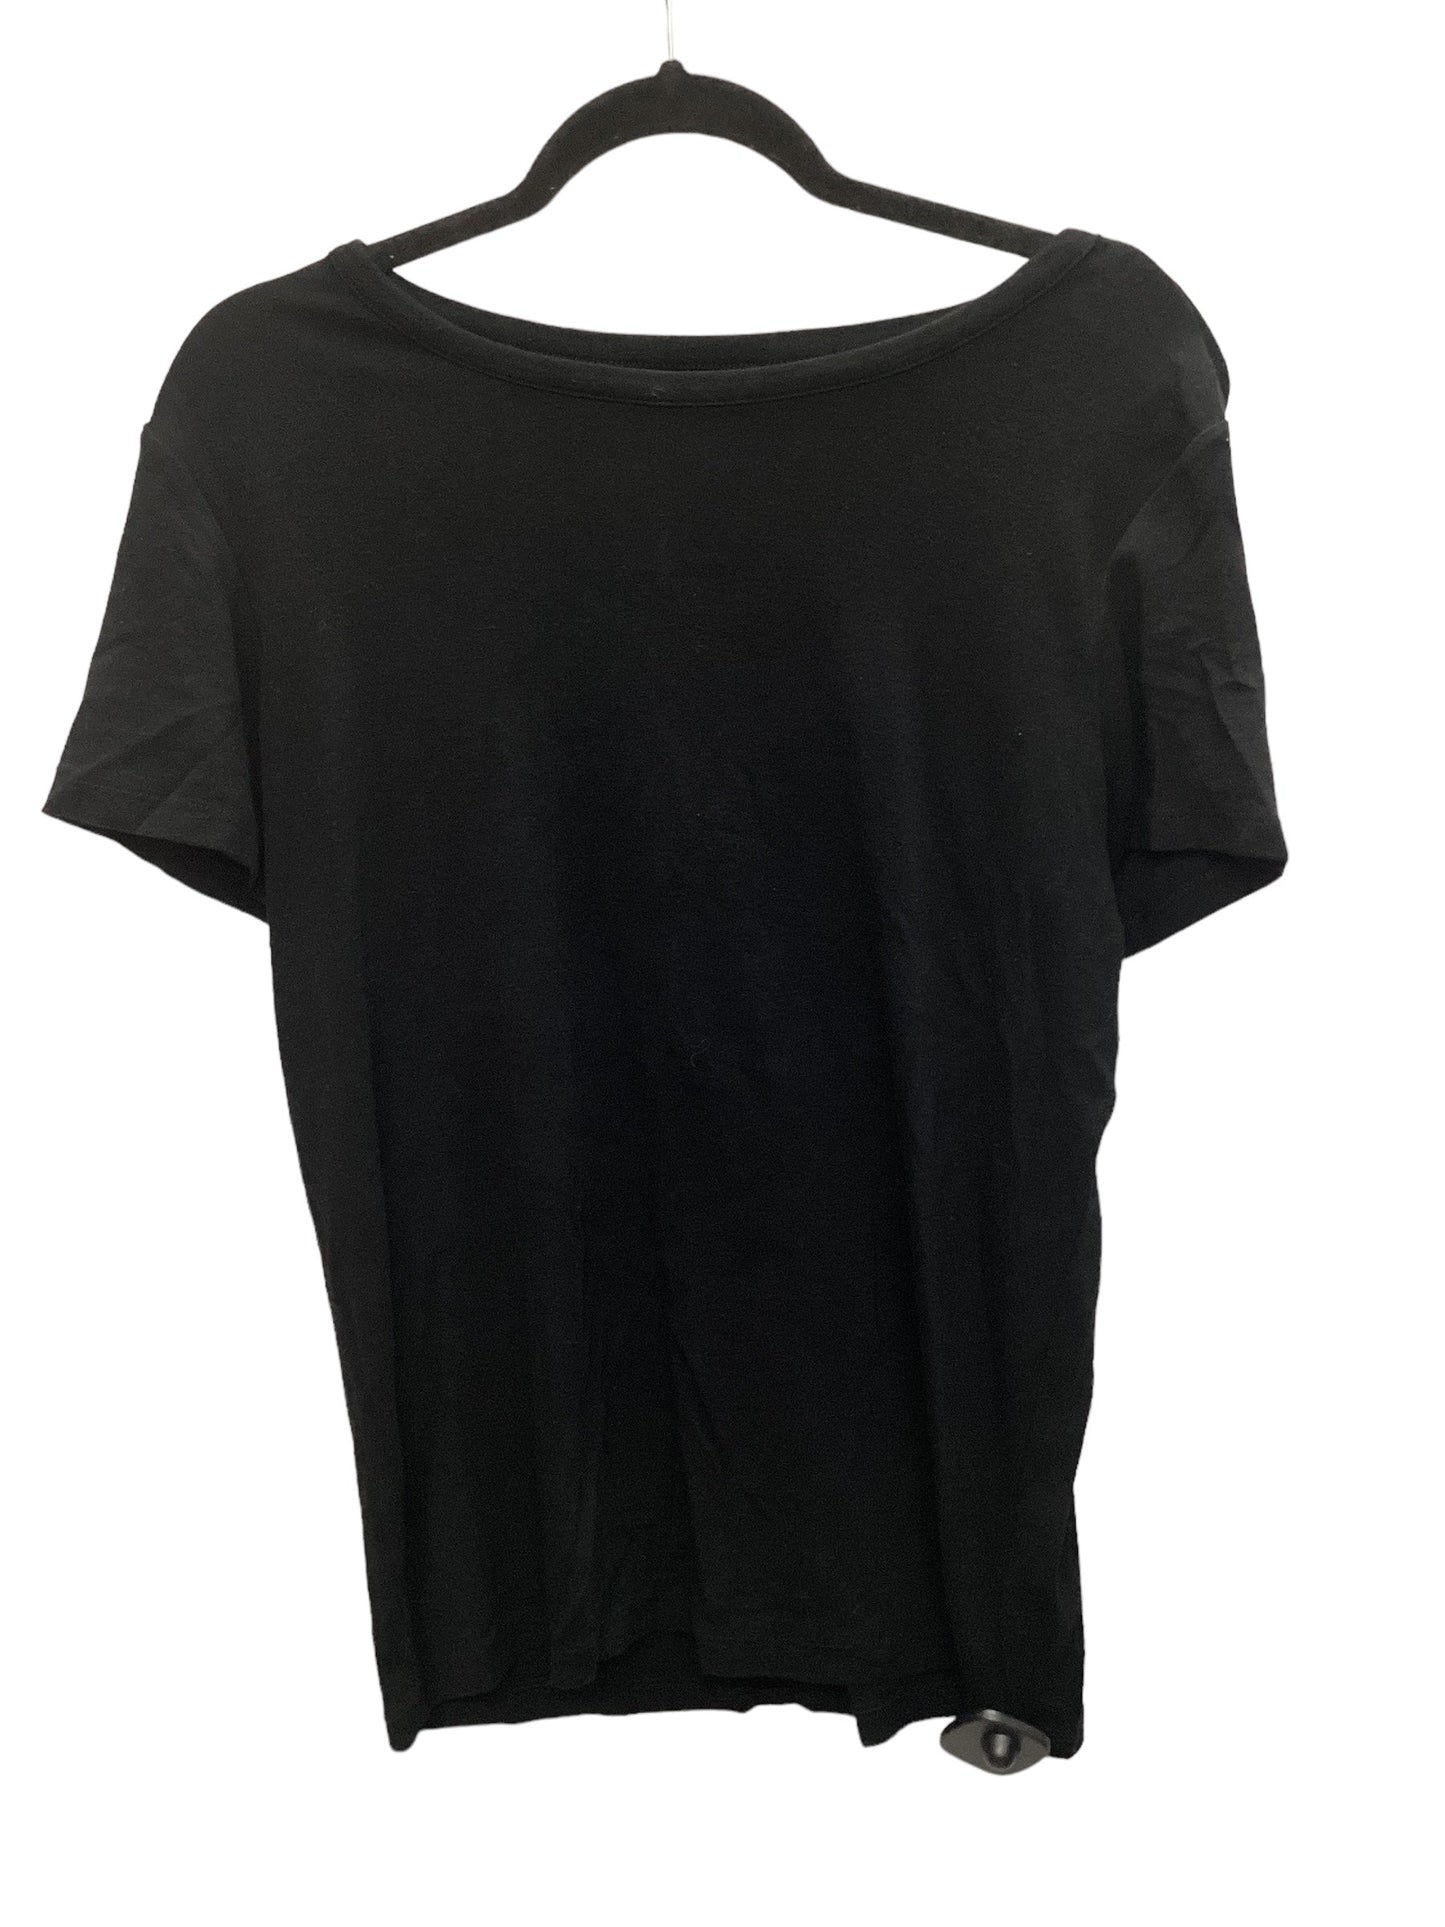 Black Top Short Sleeve Basic Jones And Co, Size Xl